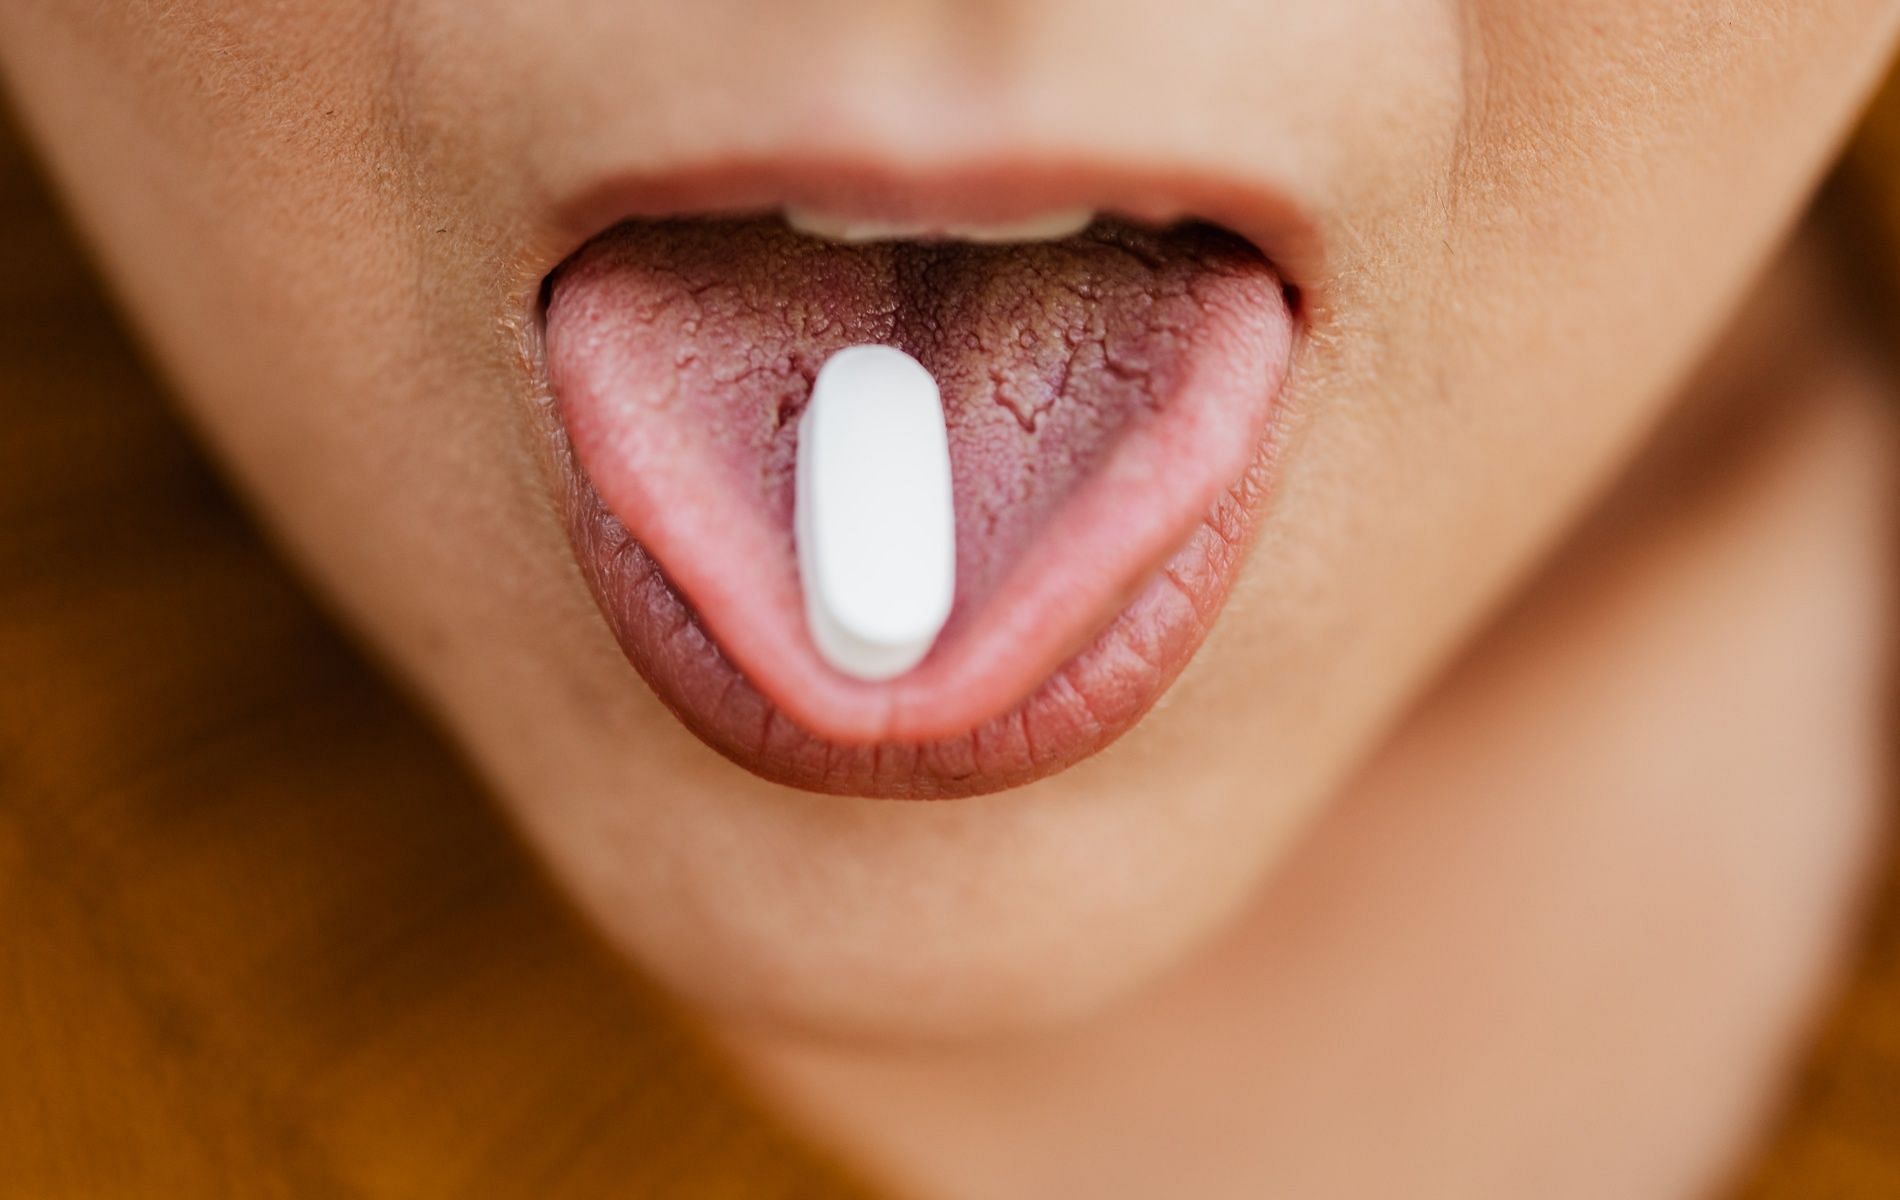 Taking too many antibiotics can develop oral thrush which can cause mucosal damage (Image by Karolina Grabowska via Pexels)